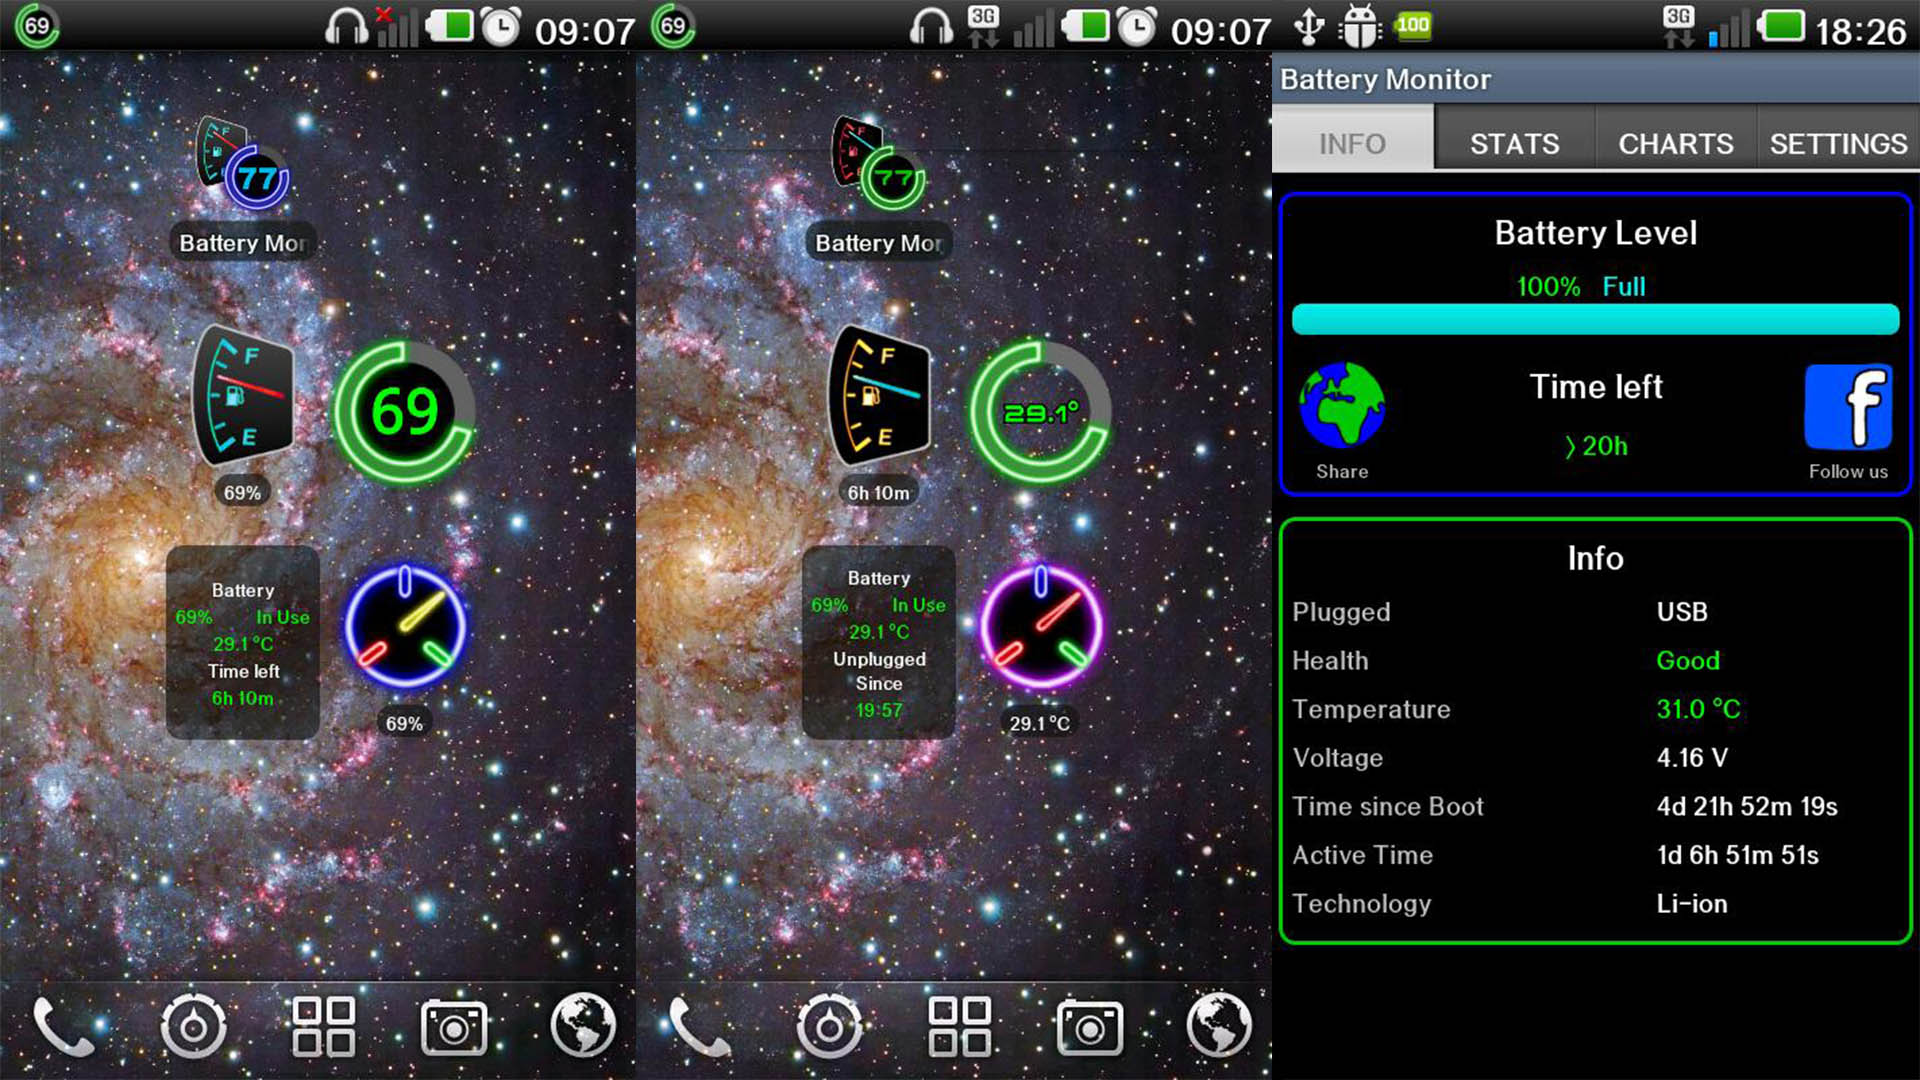 Battery Monitor Widget screenshot 2021